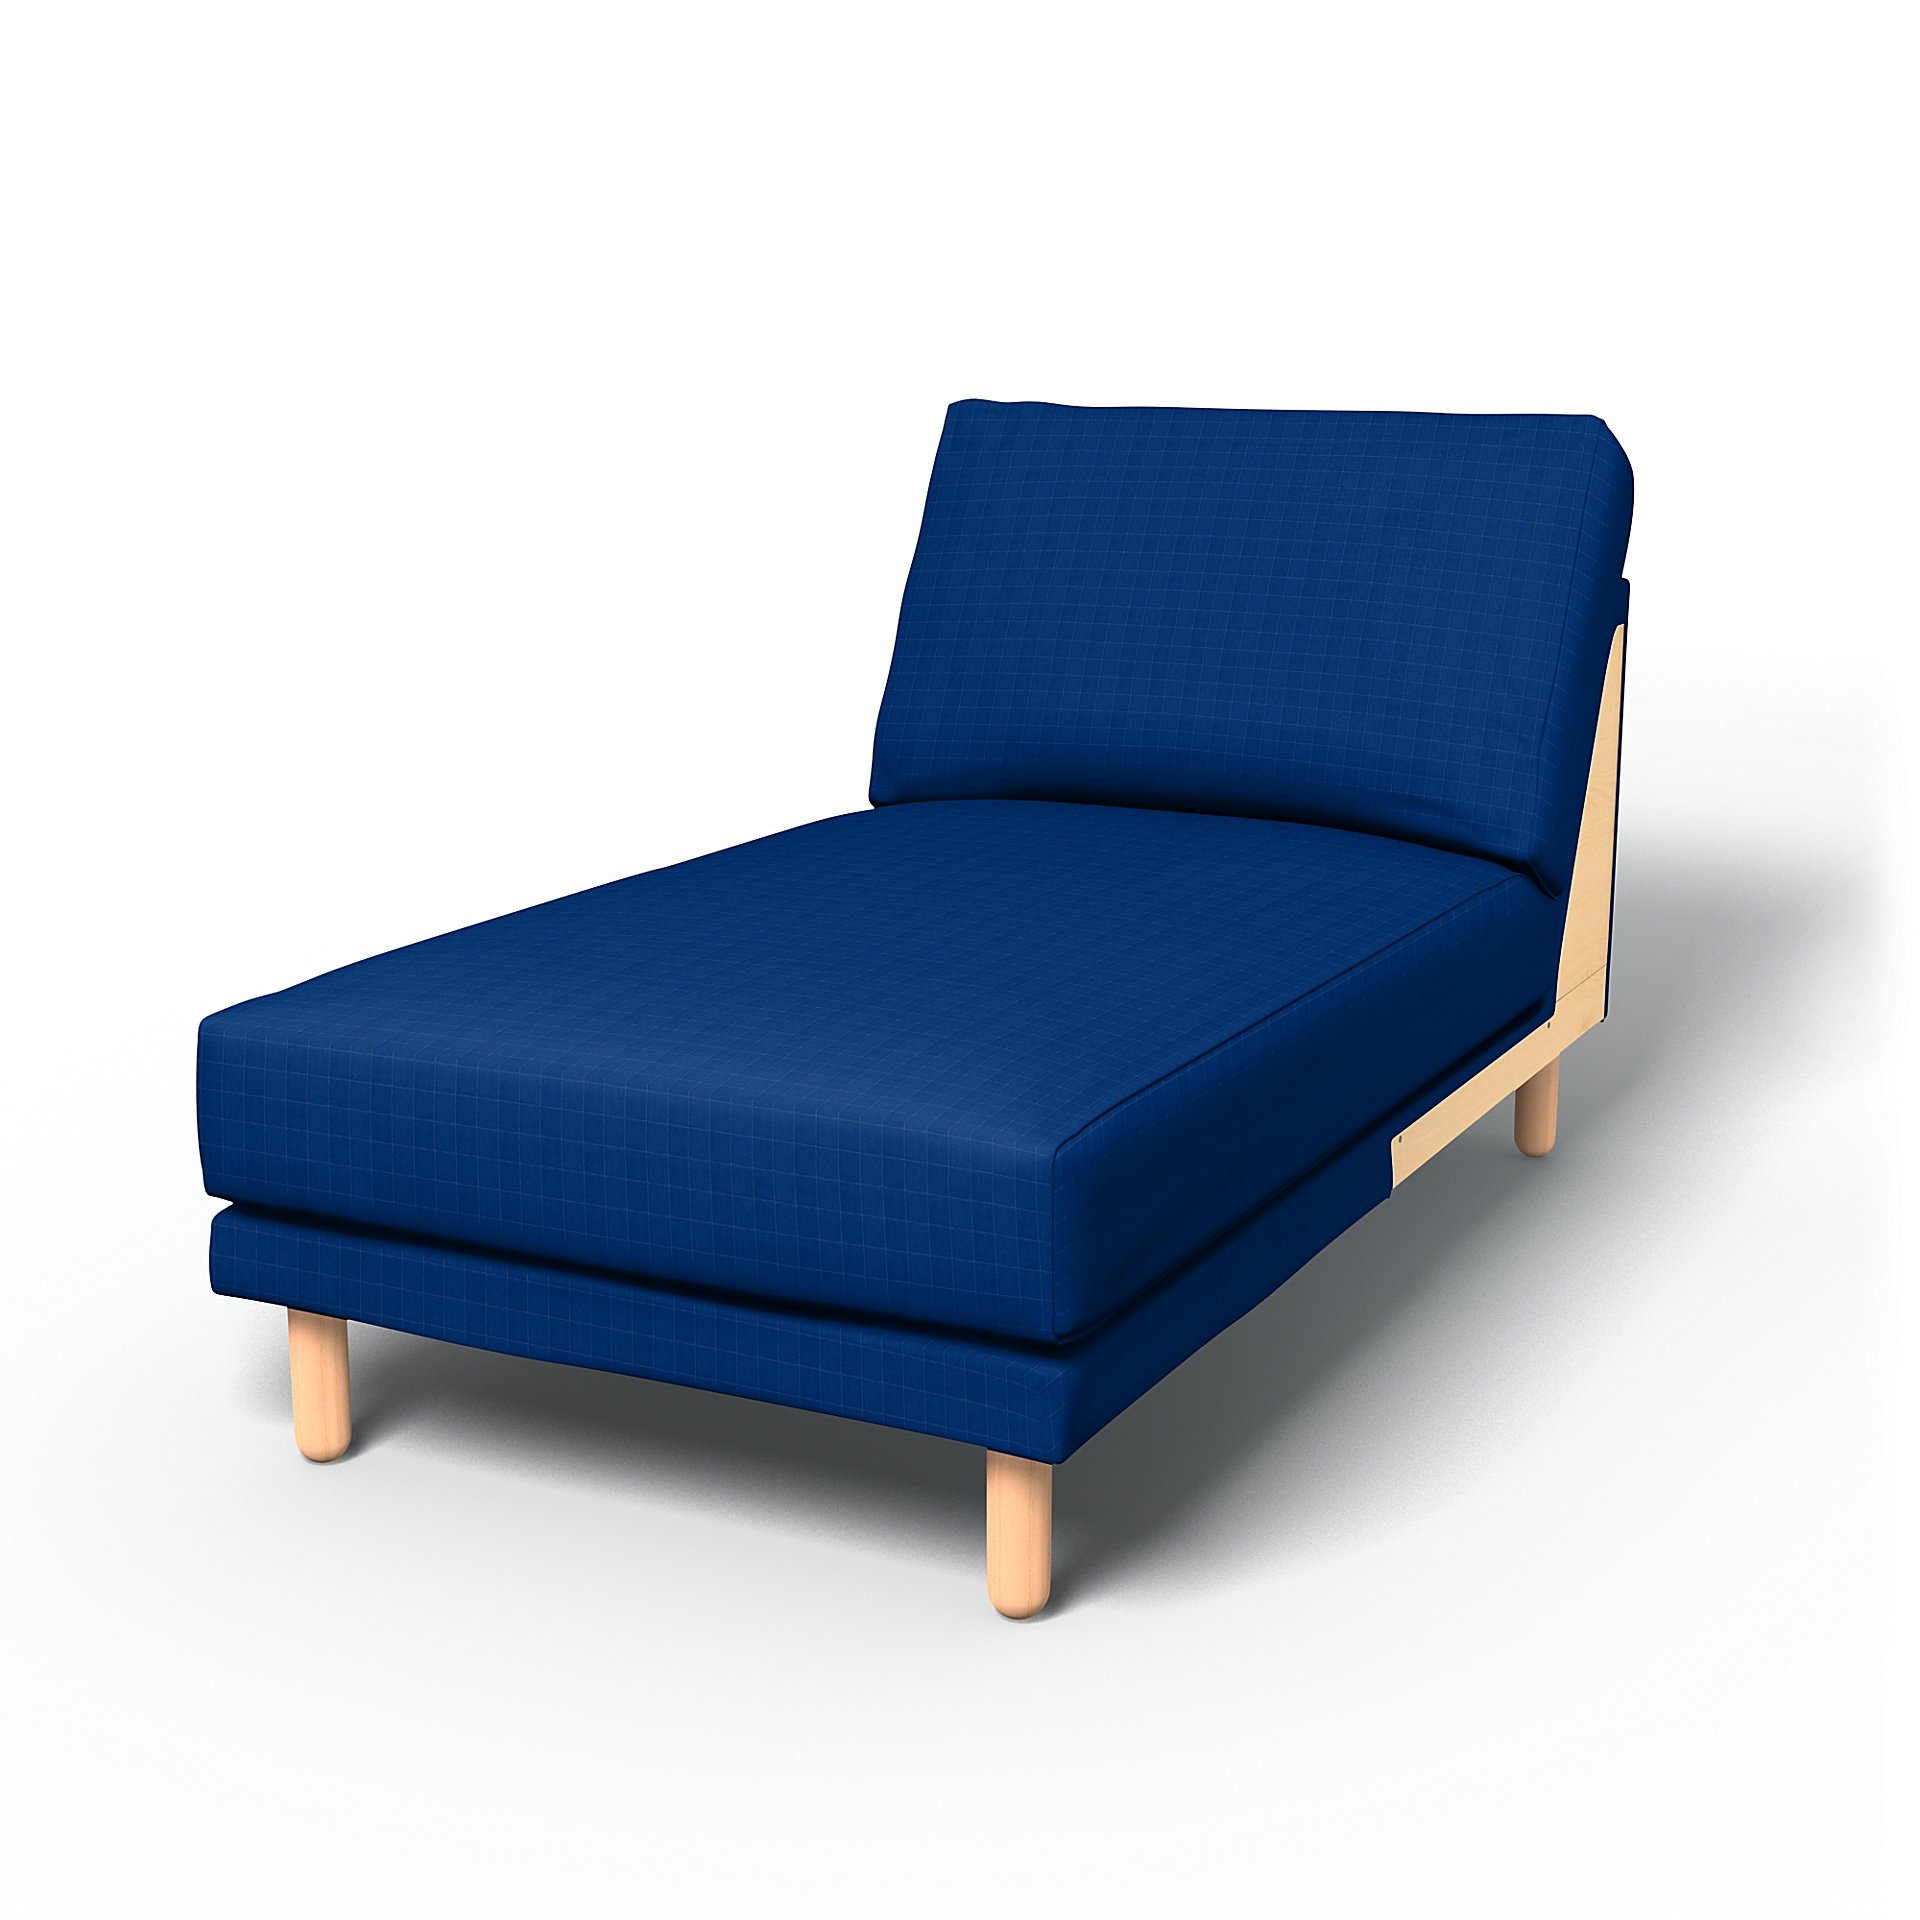 IKEA - Norsborg Chaise Longue Add-on Unit Cover, Lapis Blue, Velvet - Bemz